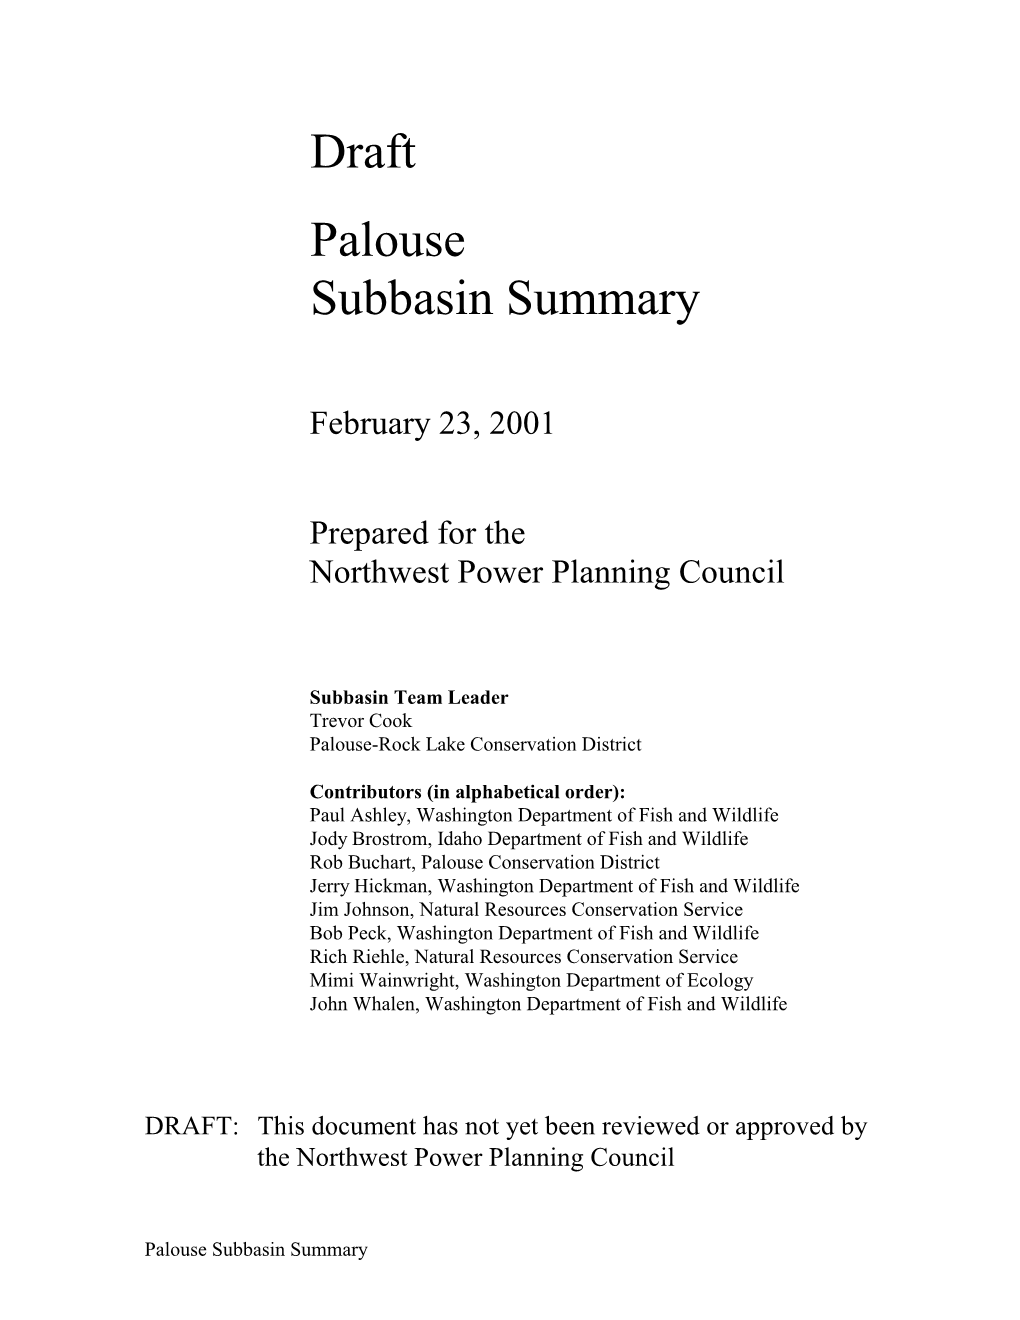 Draft Palouse Subbasin Summary